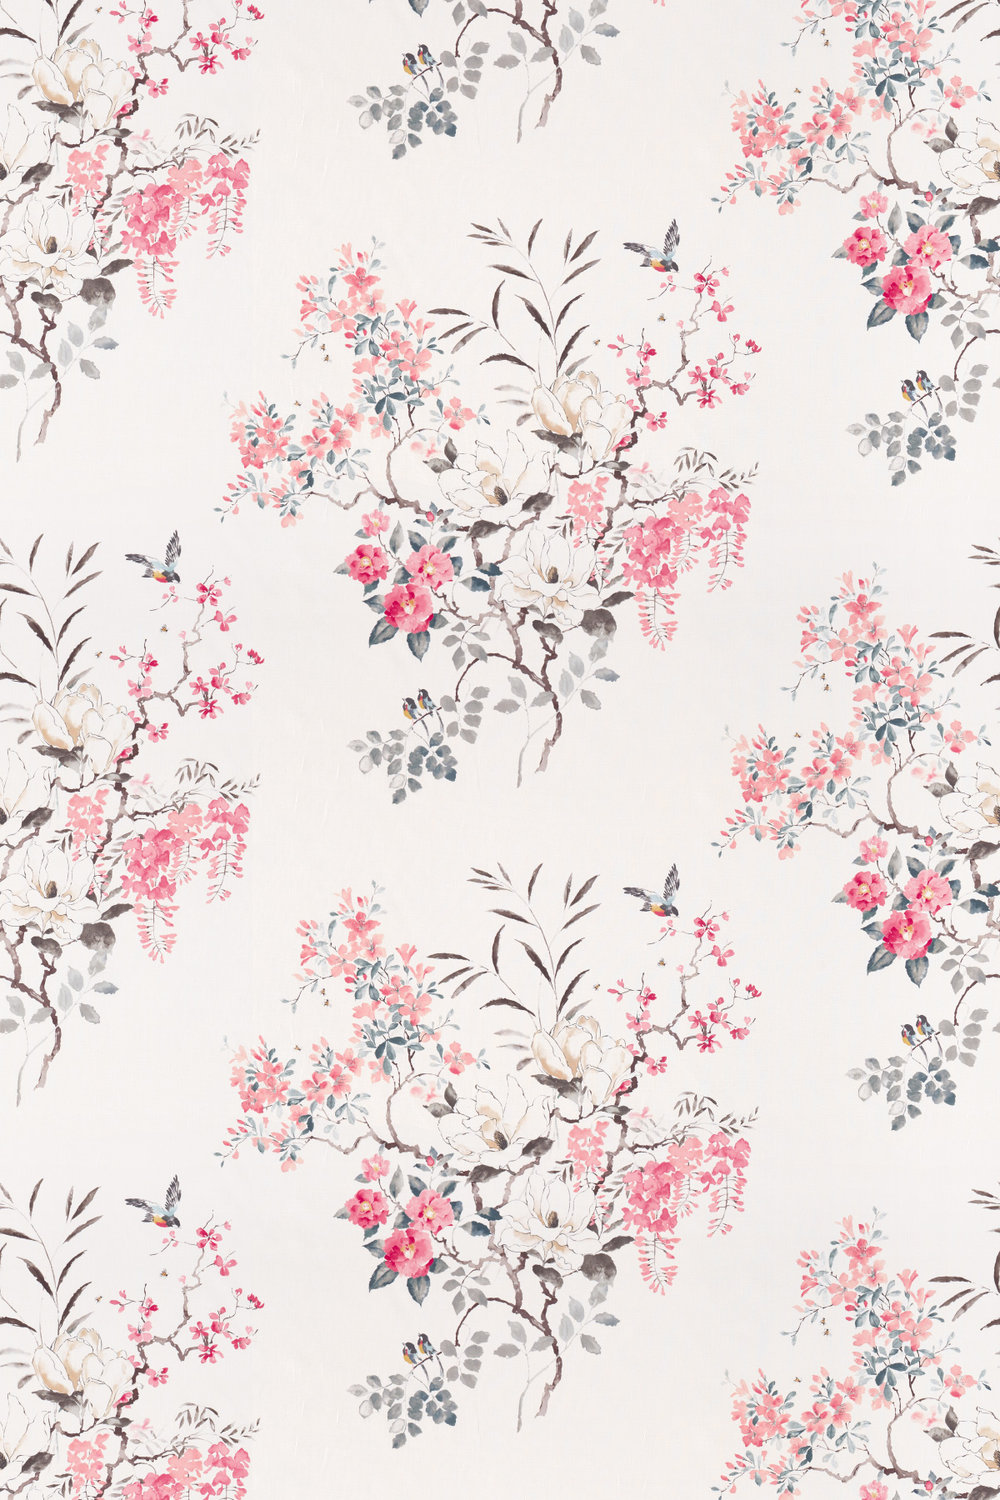 Magnolia and Blossom Fabric - Coral / Silver - by Sanderson